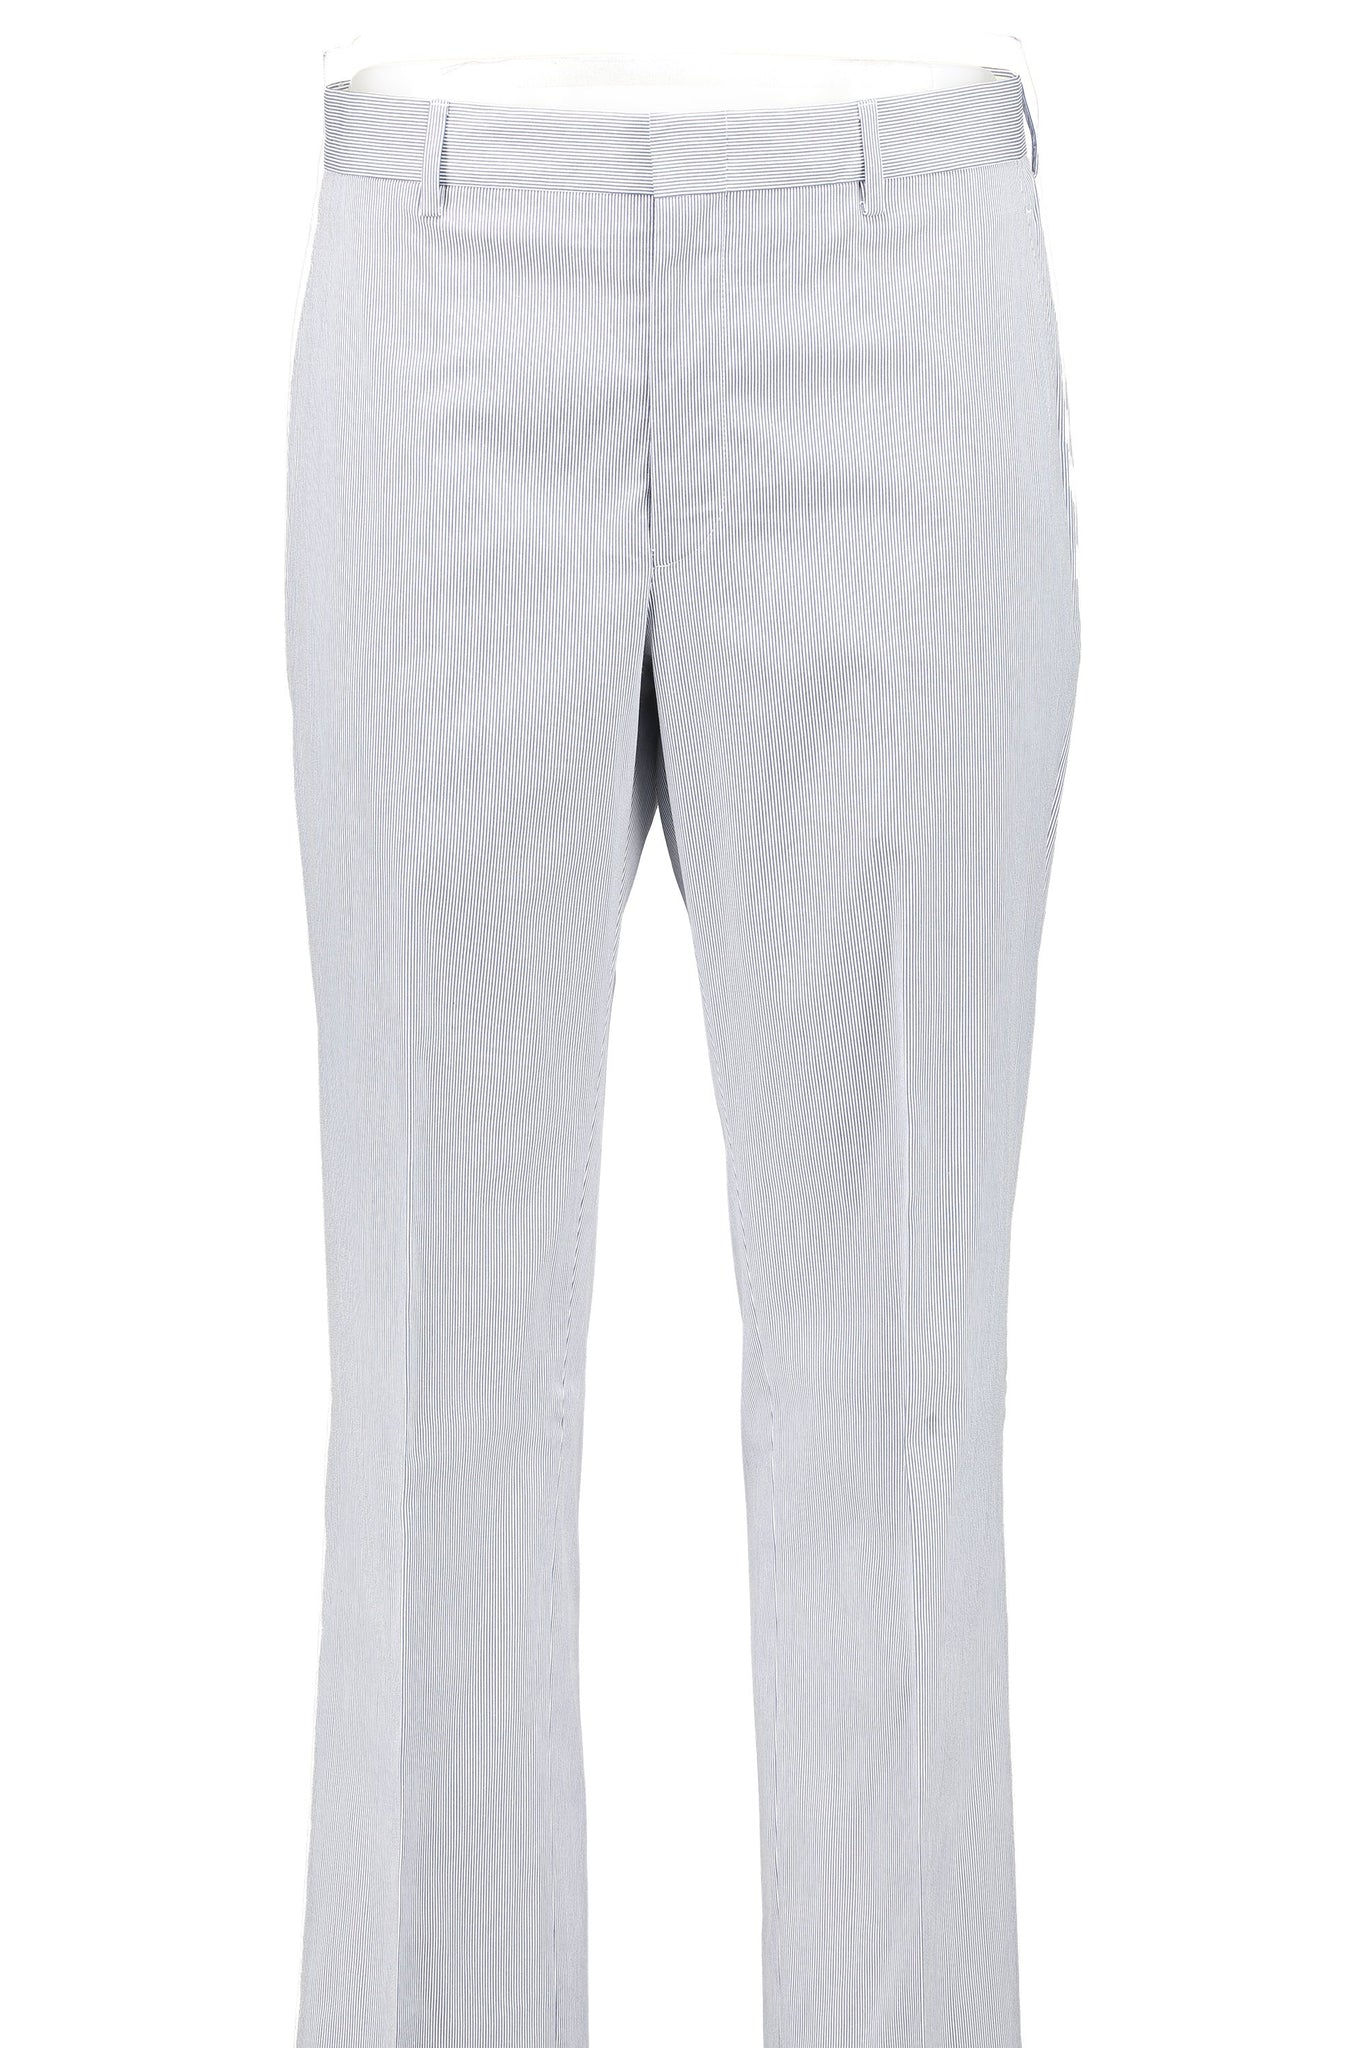 MANCREW Formal Pants for men - Formal Trousers Combo - Blue, Sky Blue